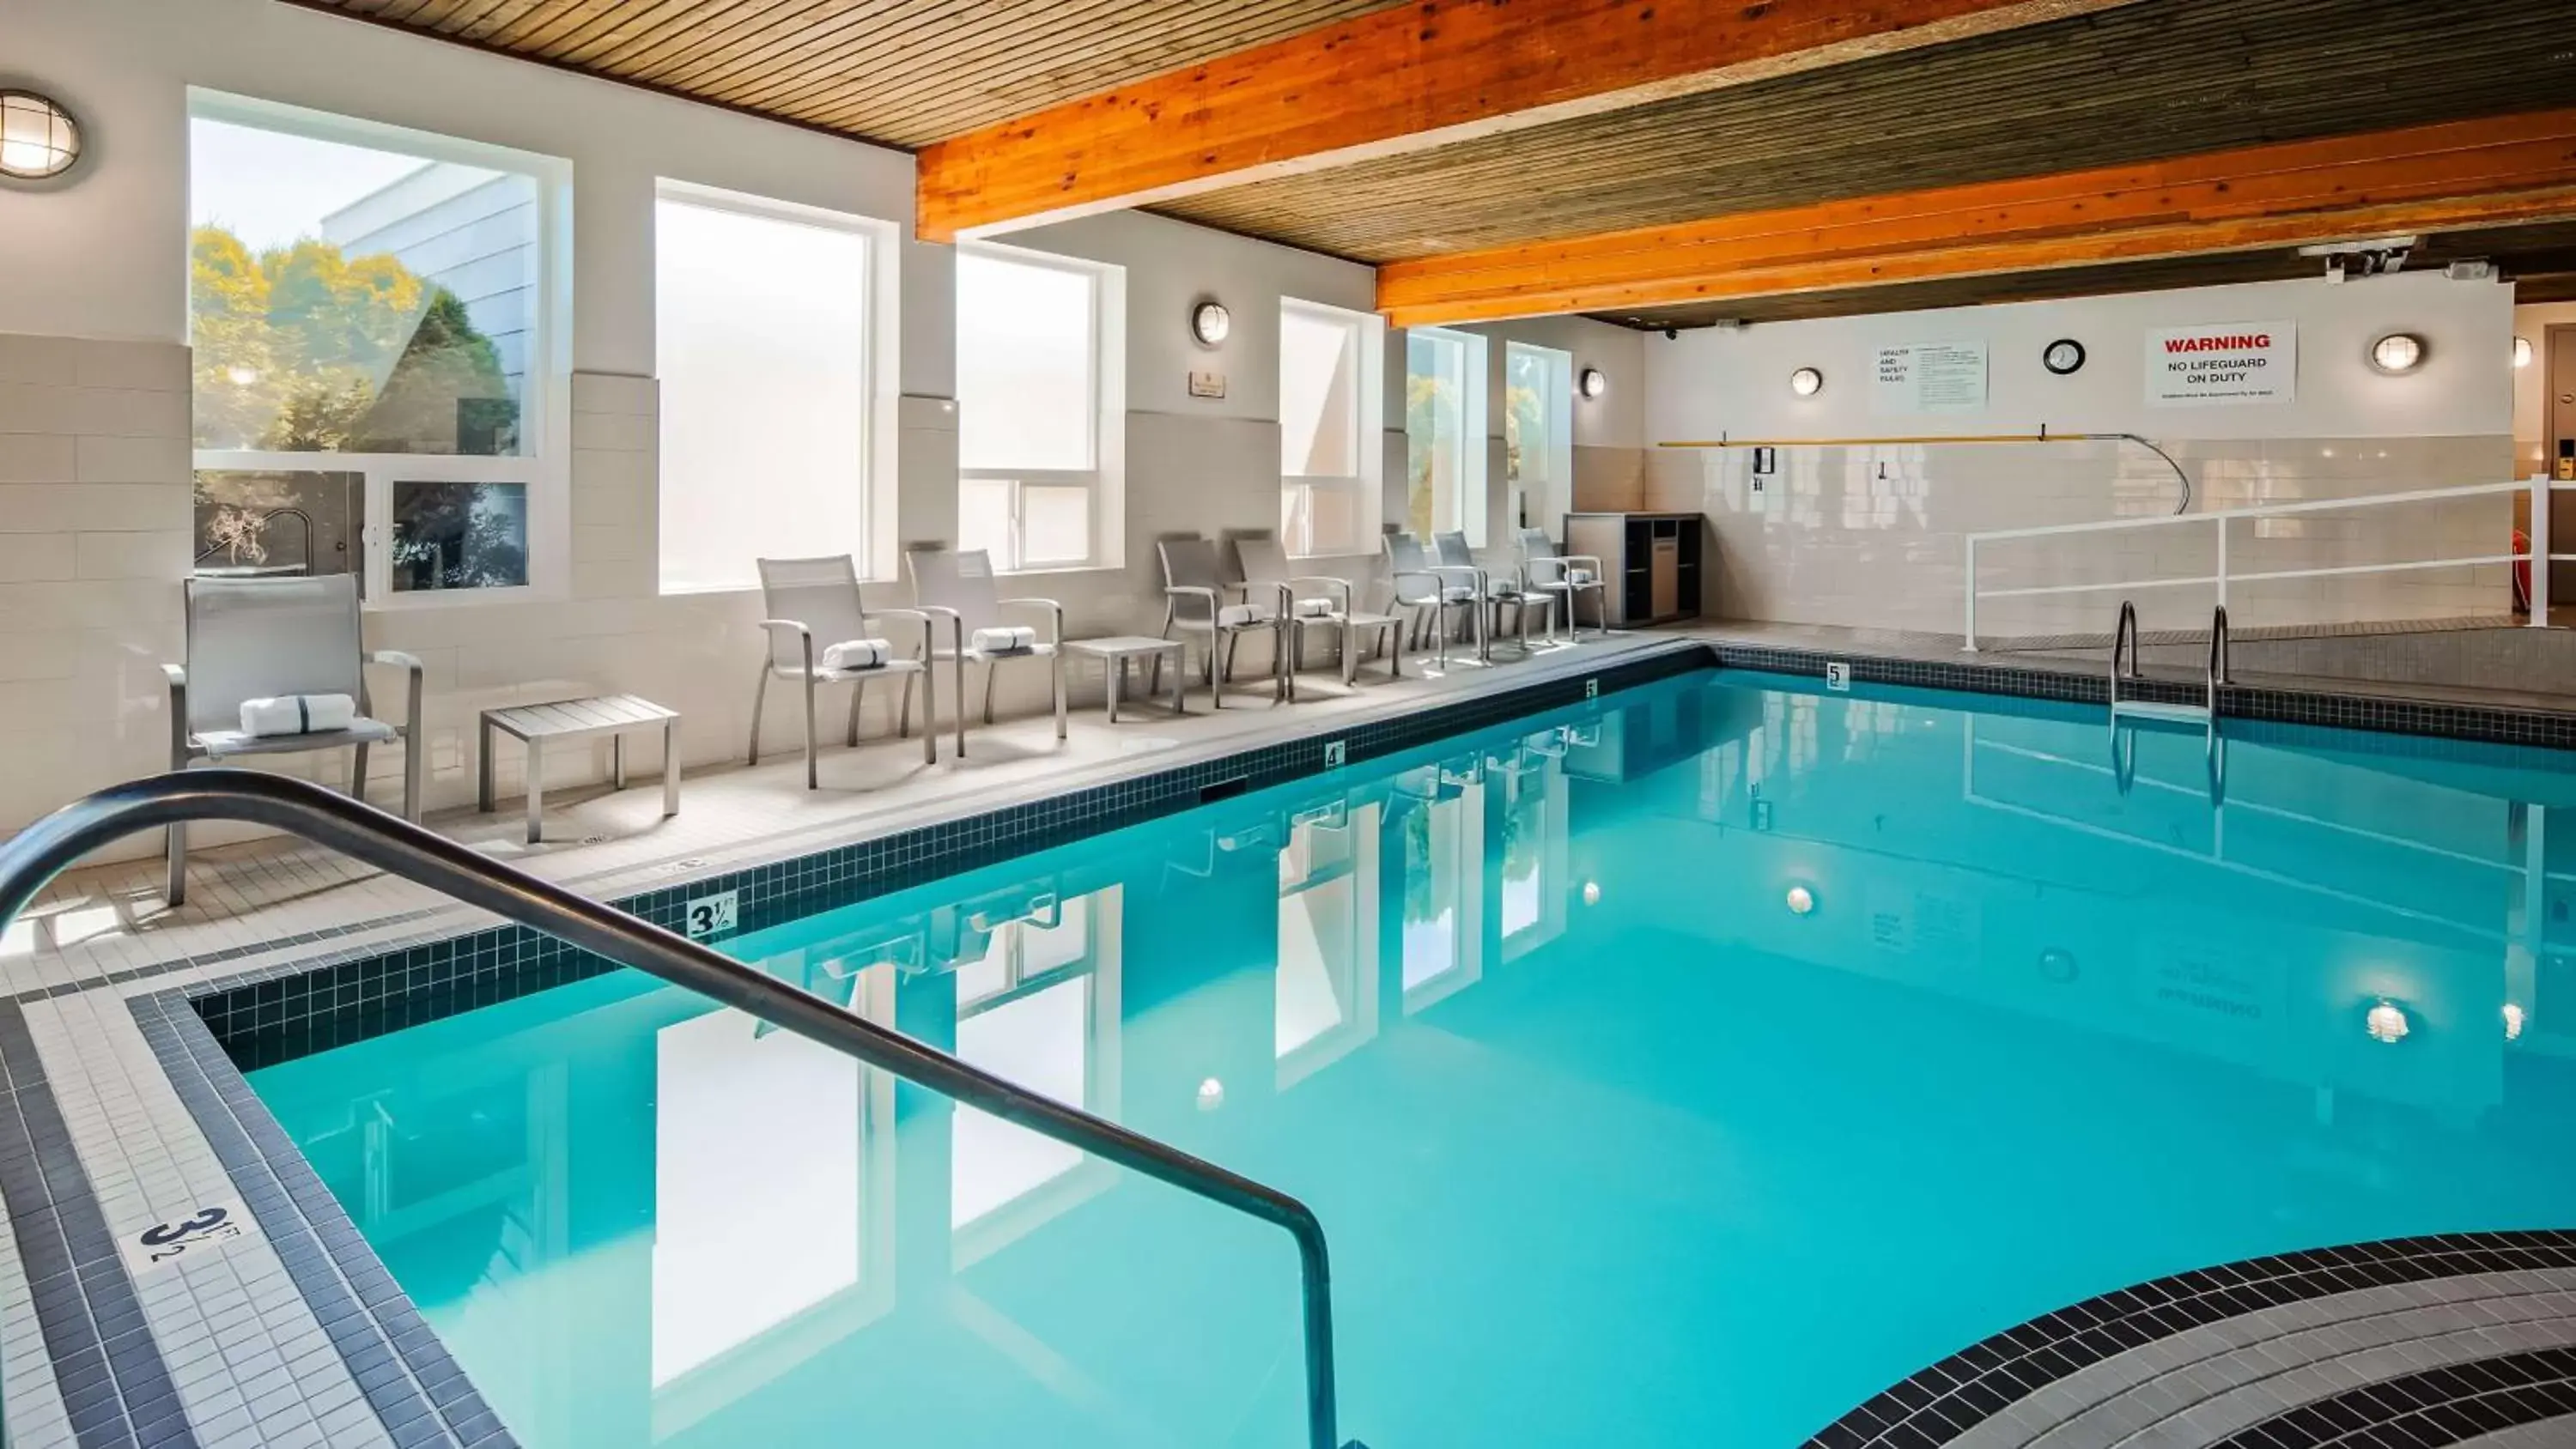 On site, Swimming Pool in Best Western Plus Country Meadows Inn